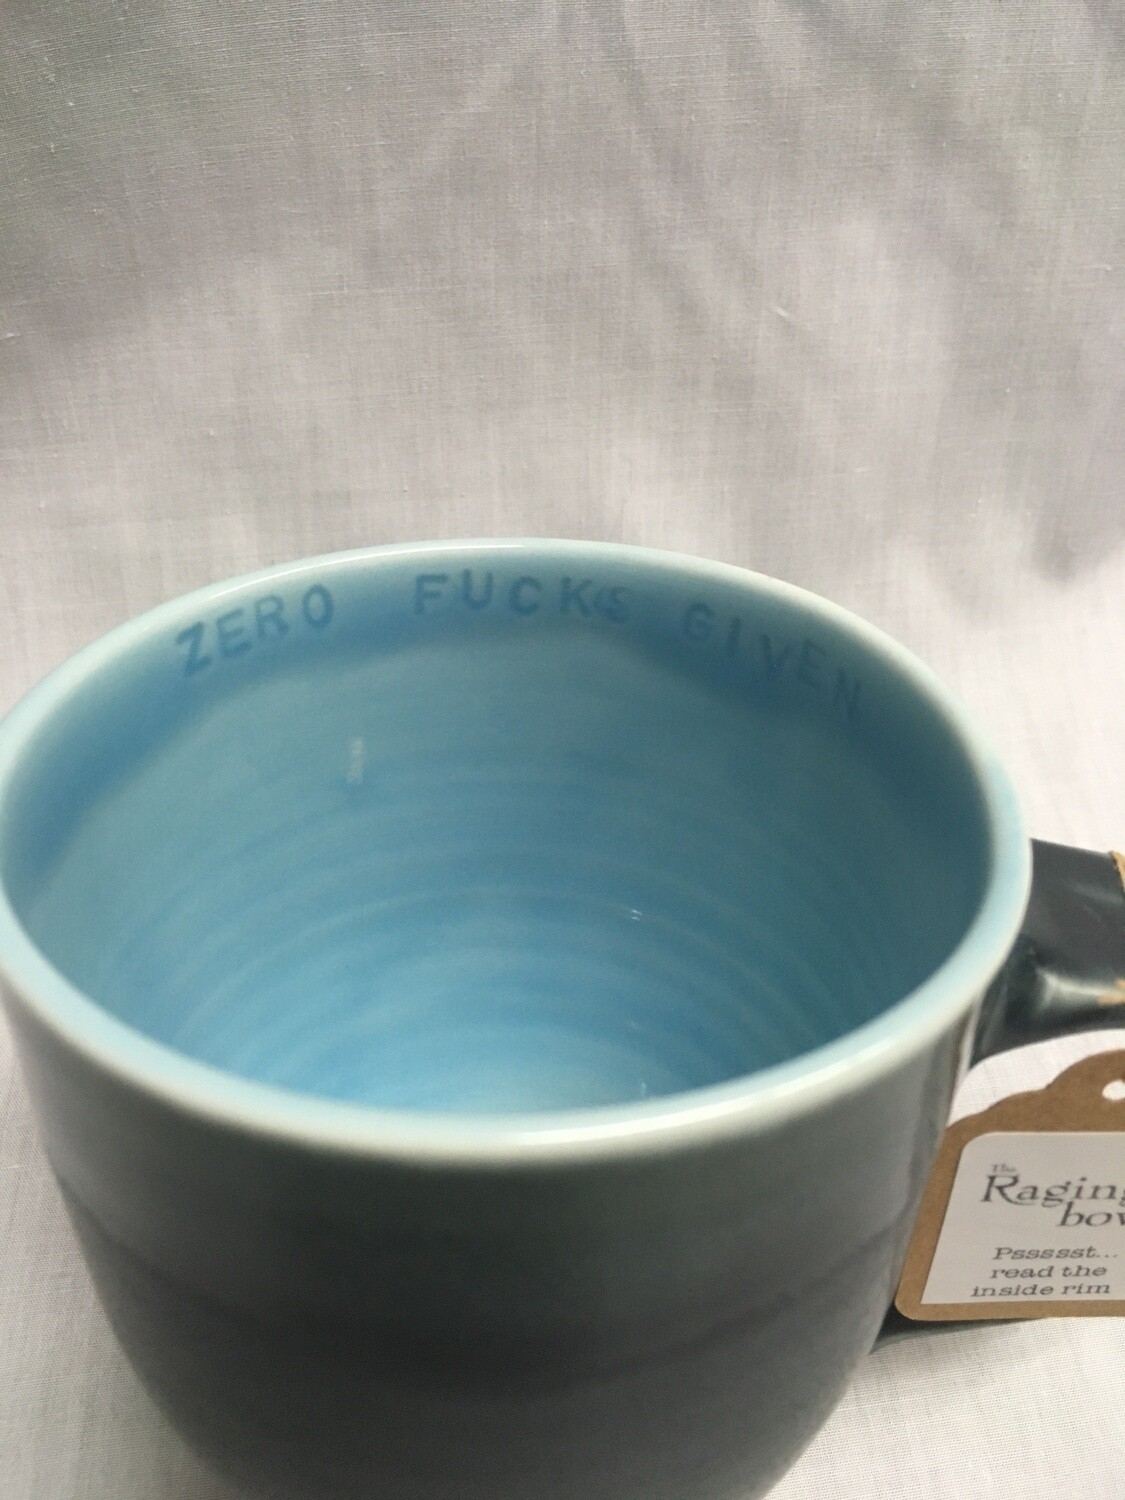 Sassy Mug - With inside mug Inscription - Zero F#@ks Given